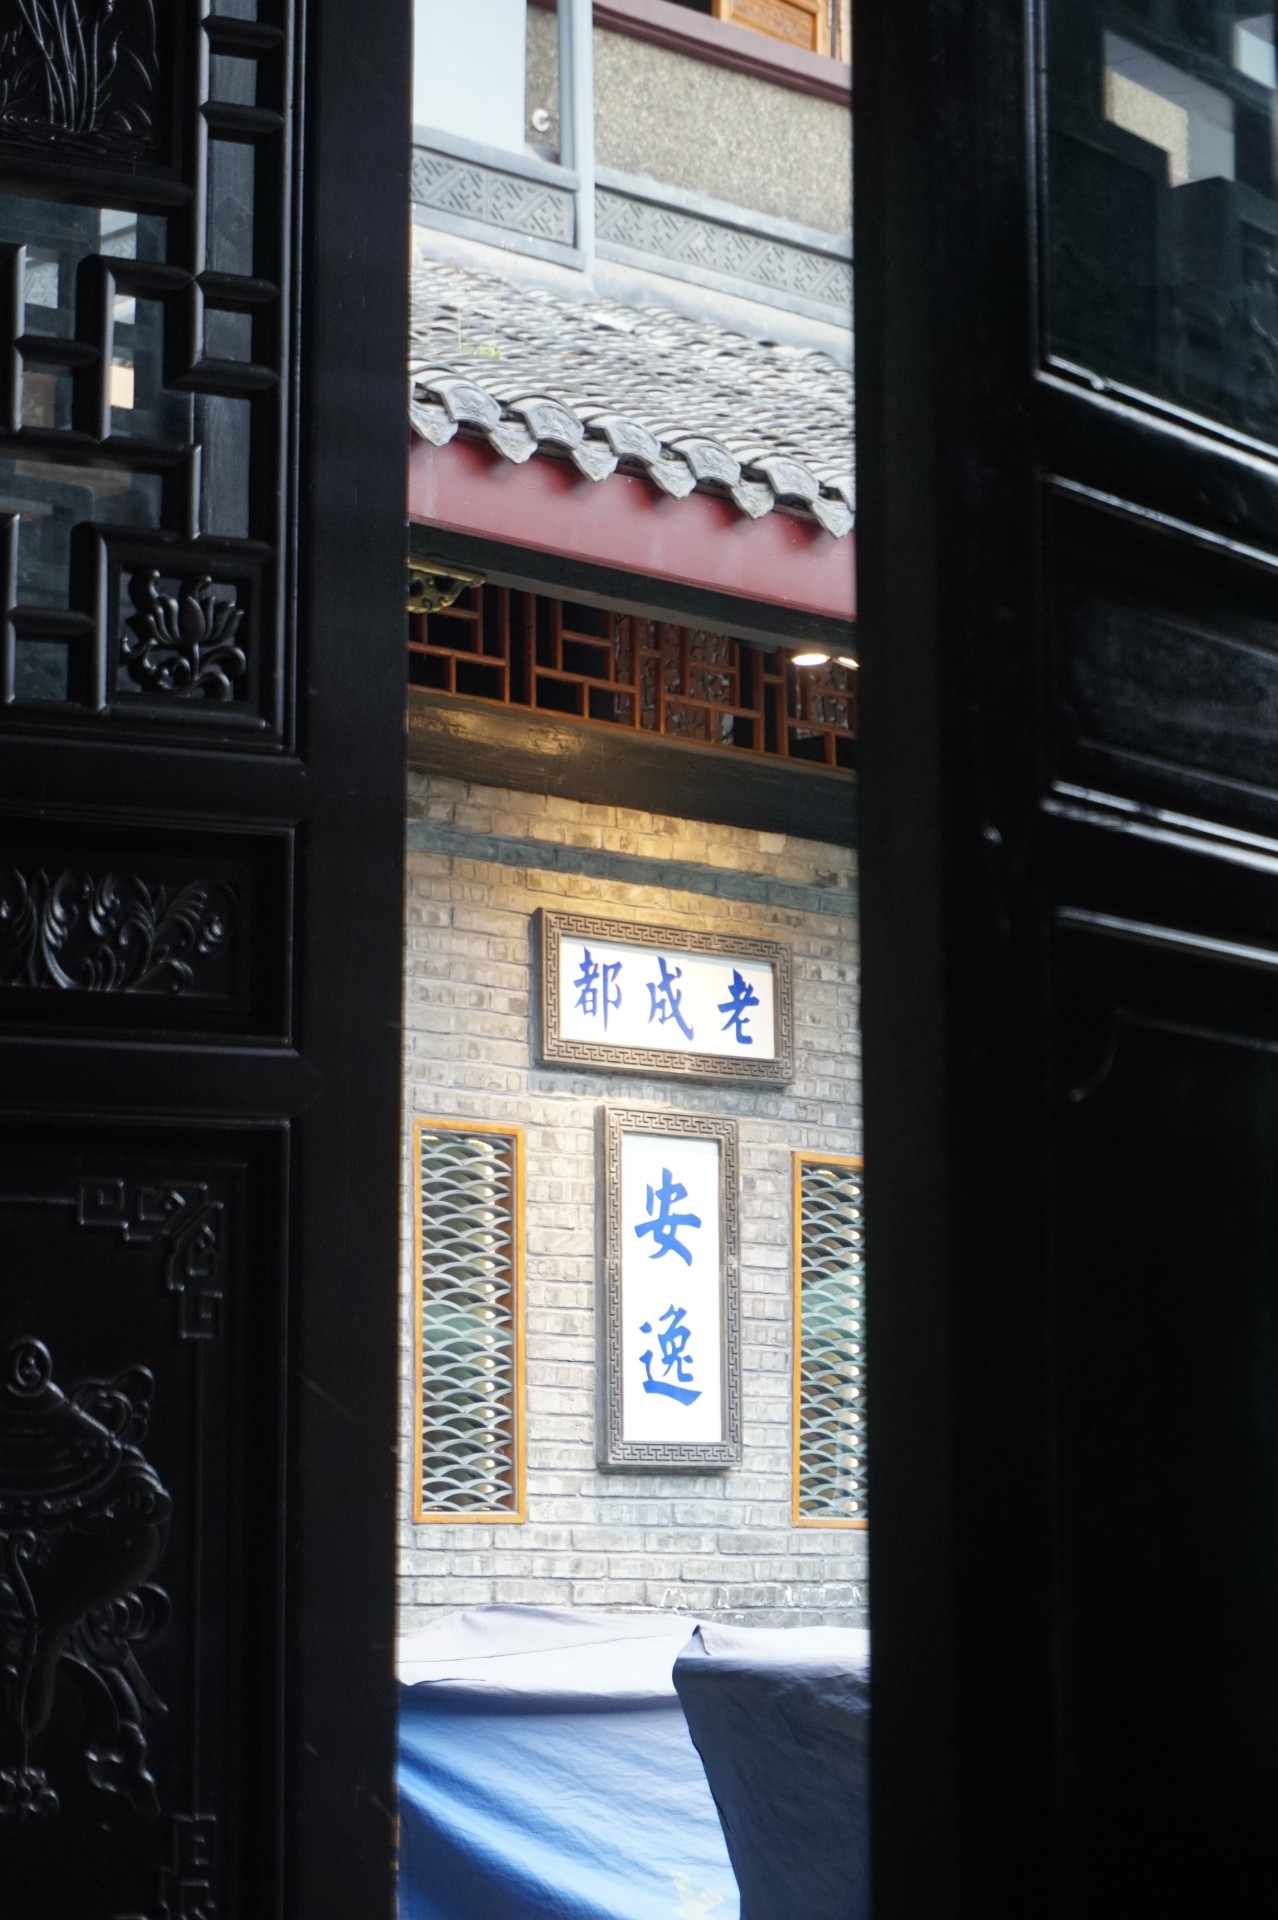 Chengdu by Ran Zhao@unsplash